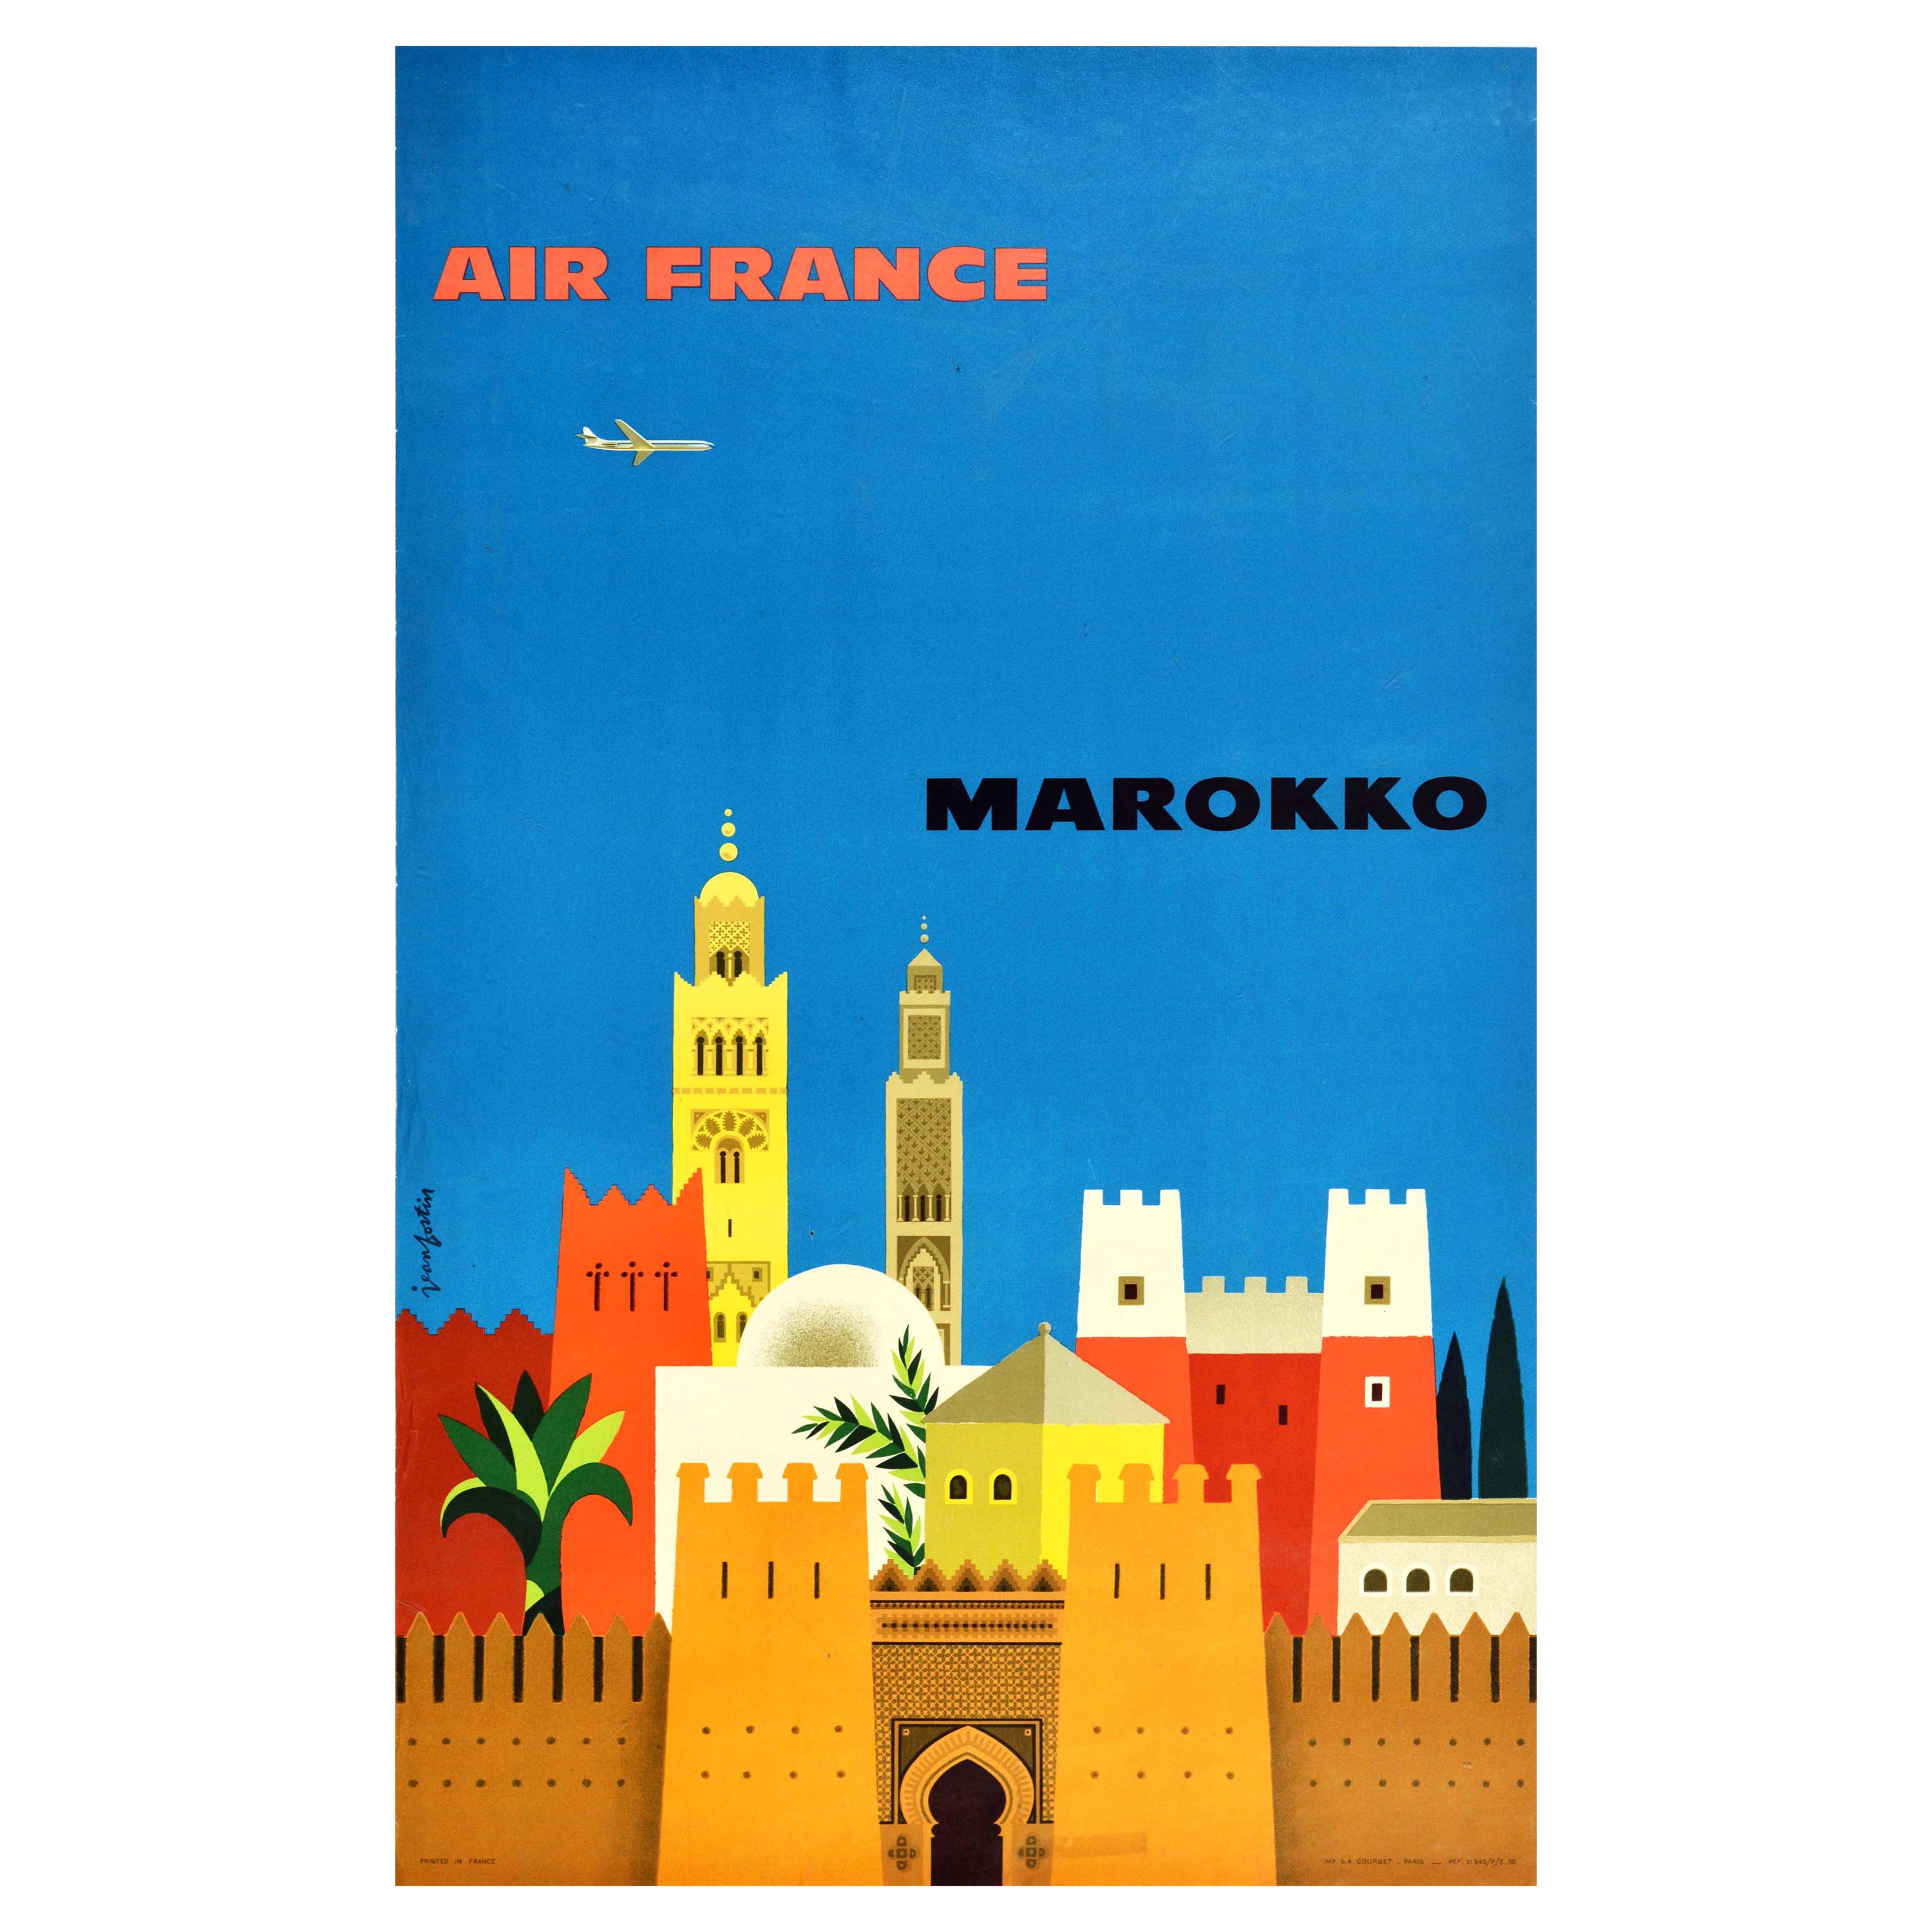 Original Vintage Airline Travel Poster Air France Marokko Morocco North Africa